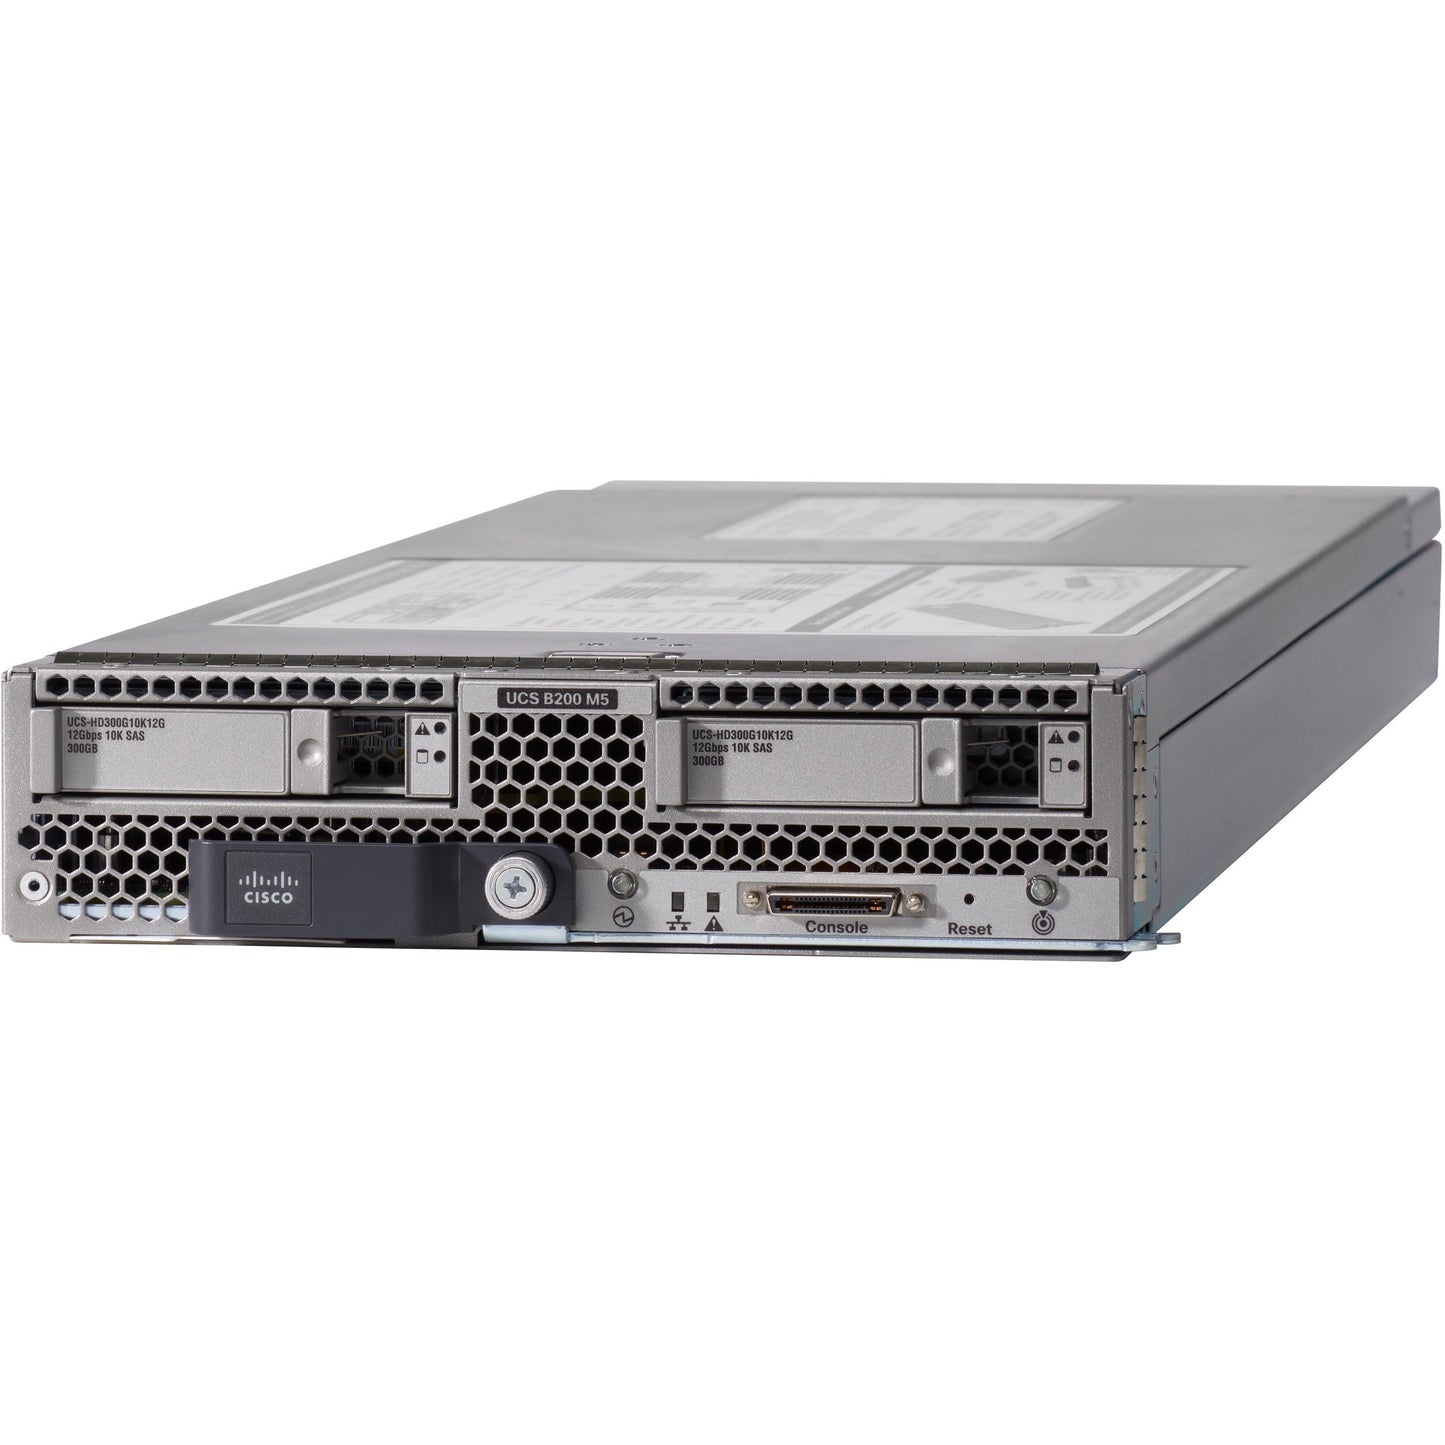 Cisco B200 M5 Blade Server - 2 x Intel Xeon Gold 6134 3.20 GHz - 192 GB RAM - Serial ATA 12Gb/s SAS Controller